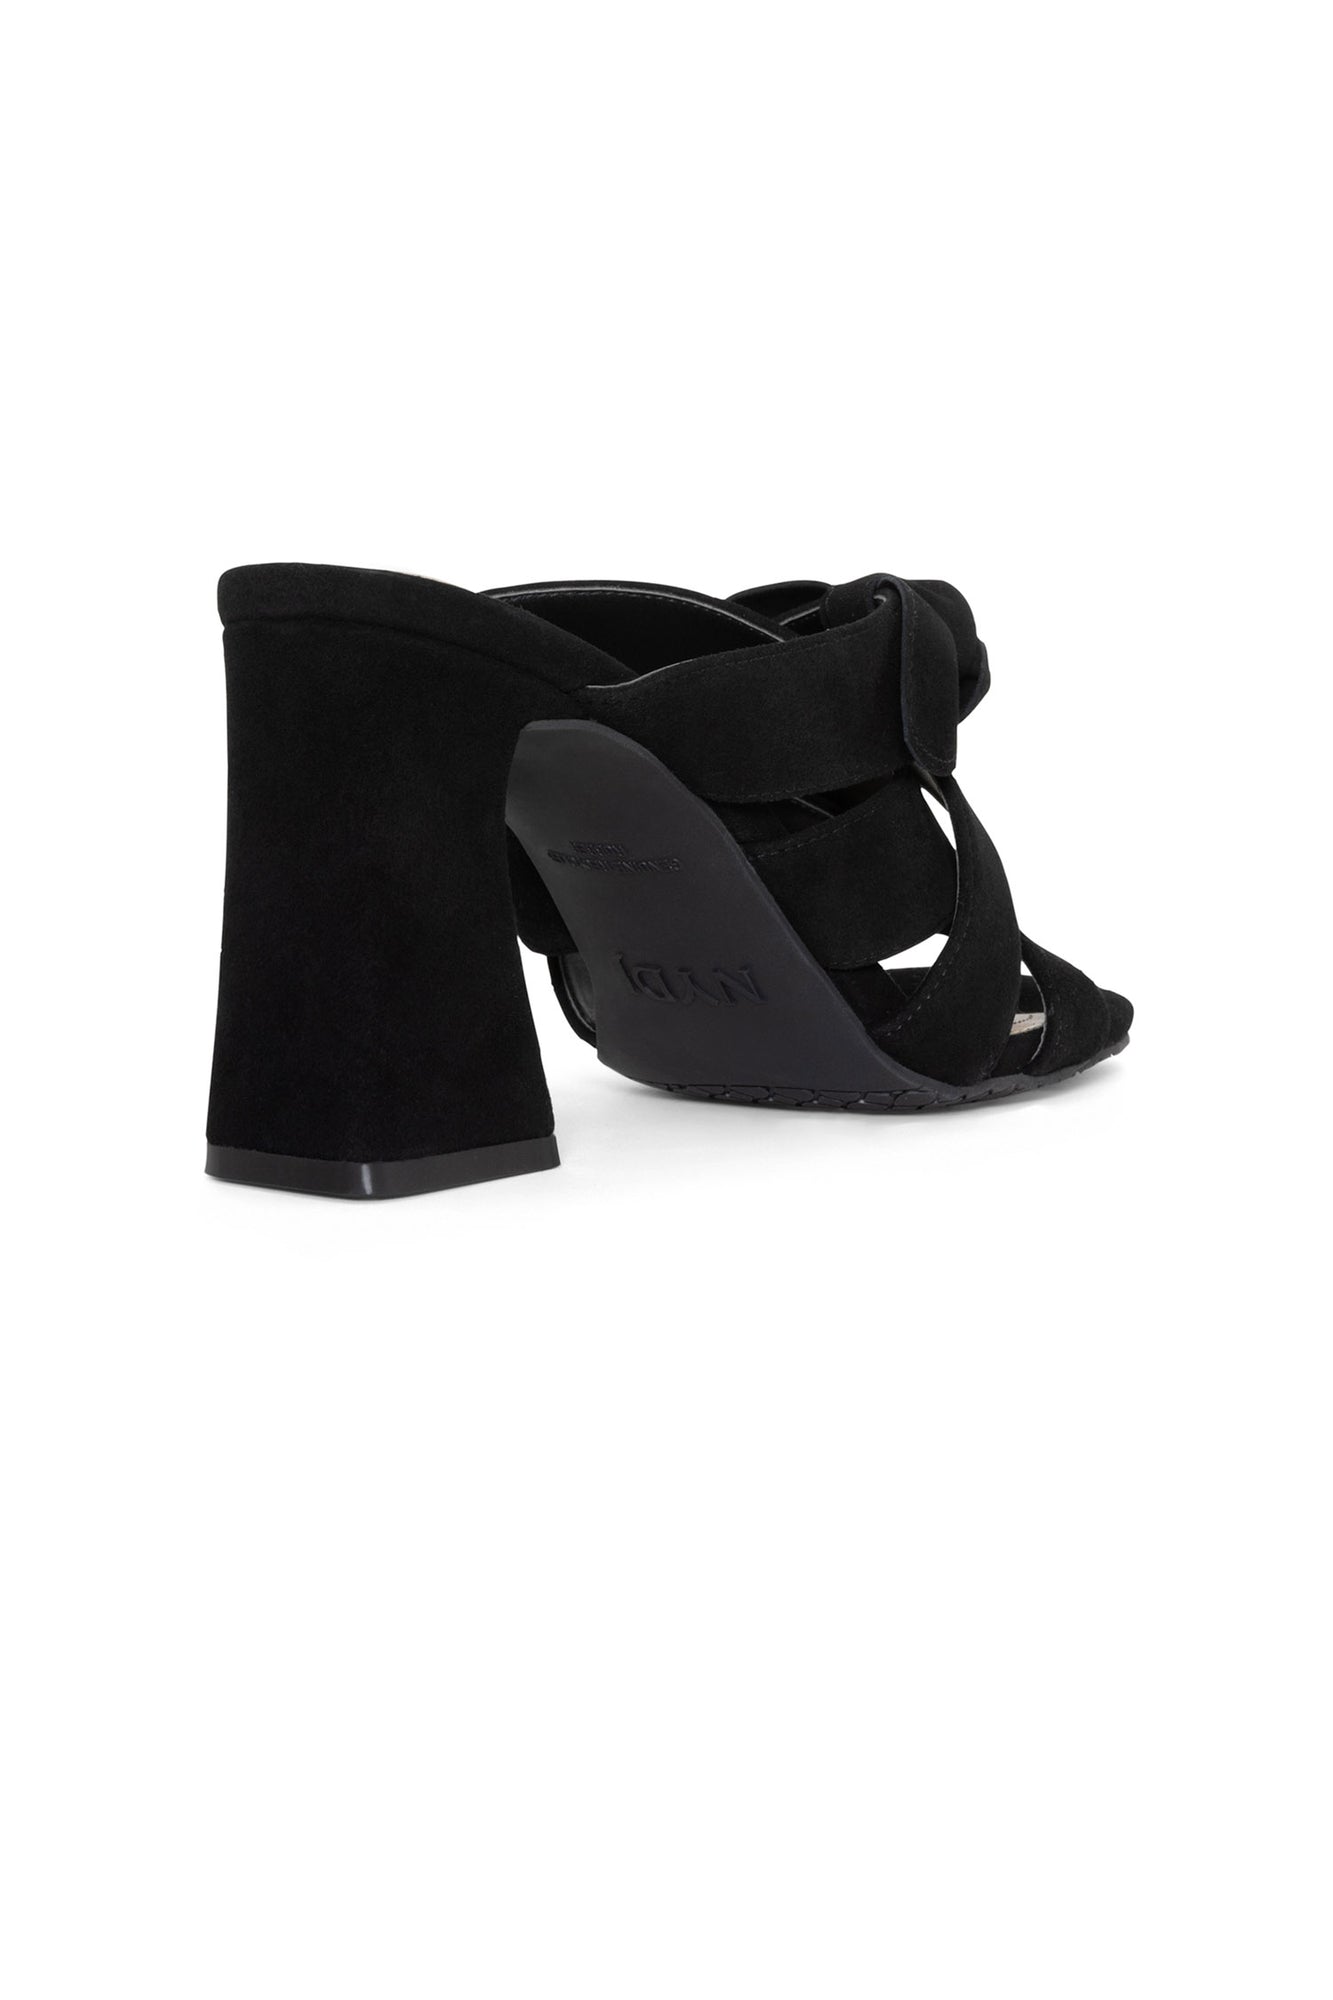 NYDJ Loreri Mule Sandals In Suede - Black